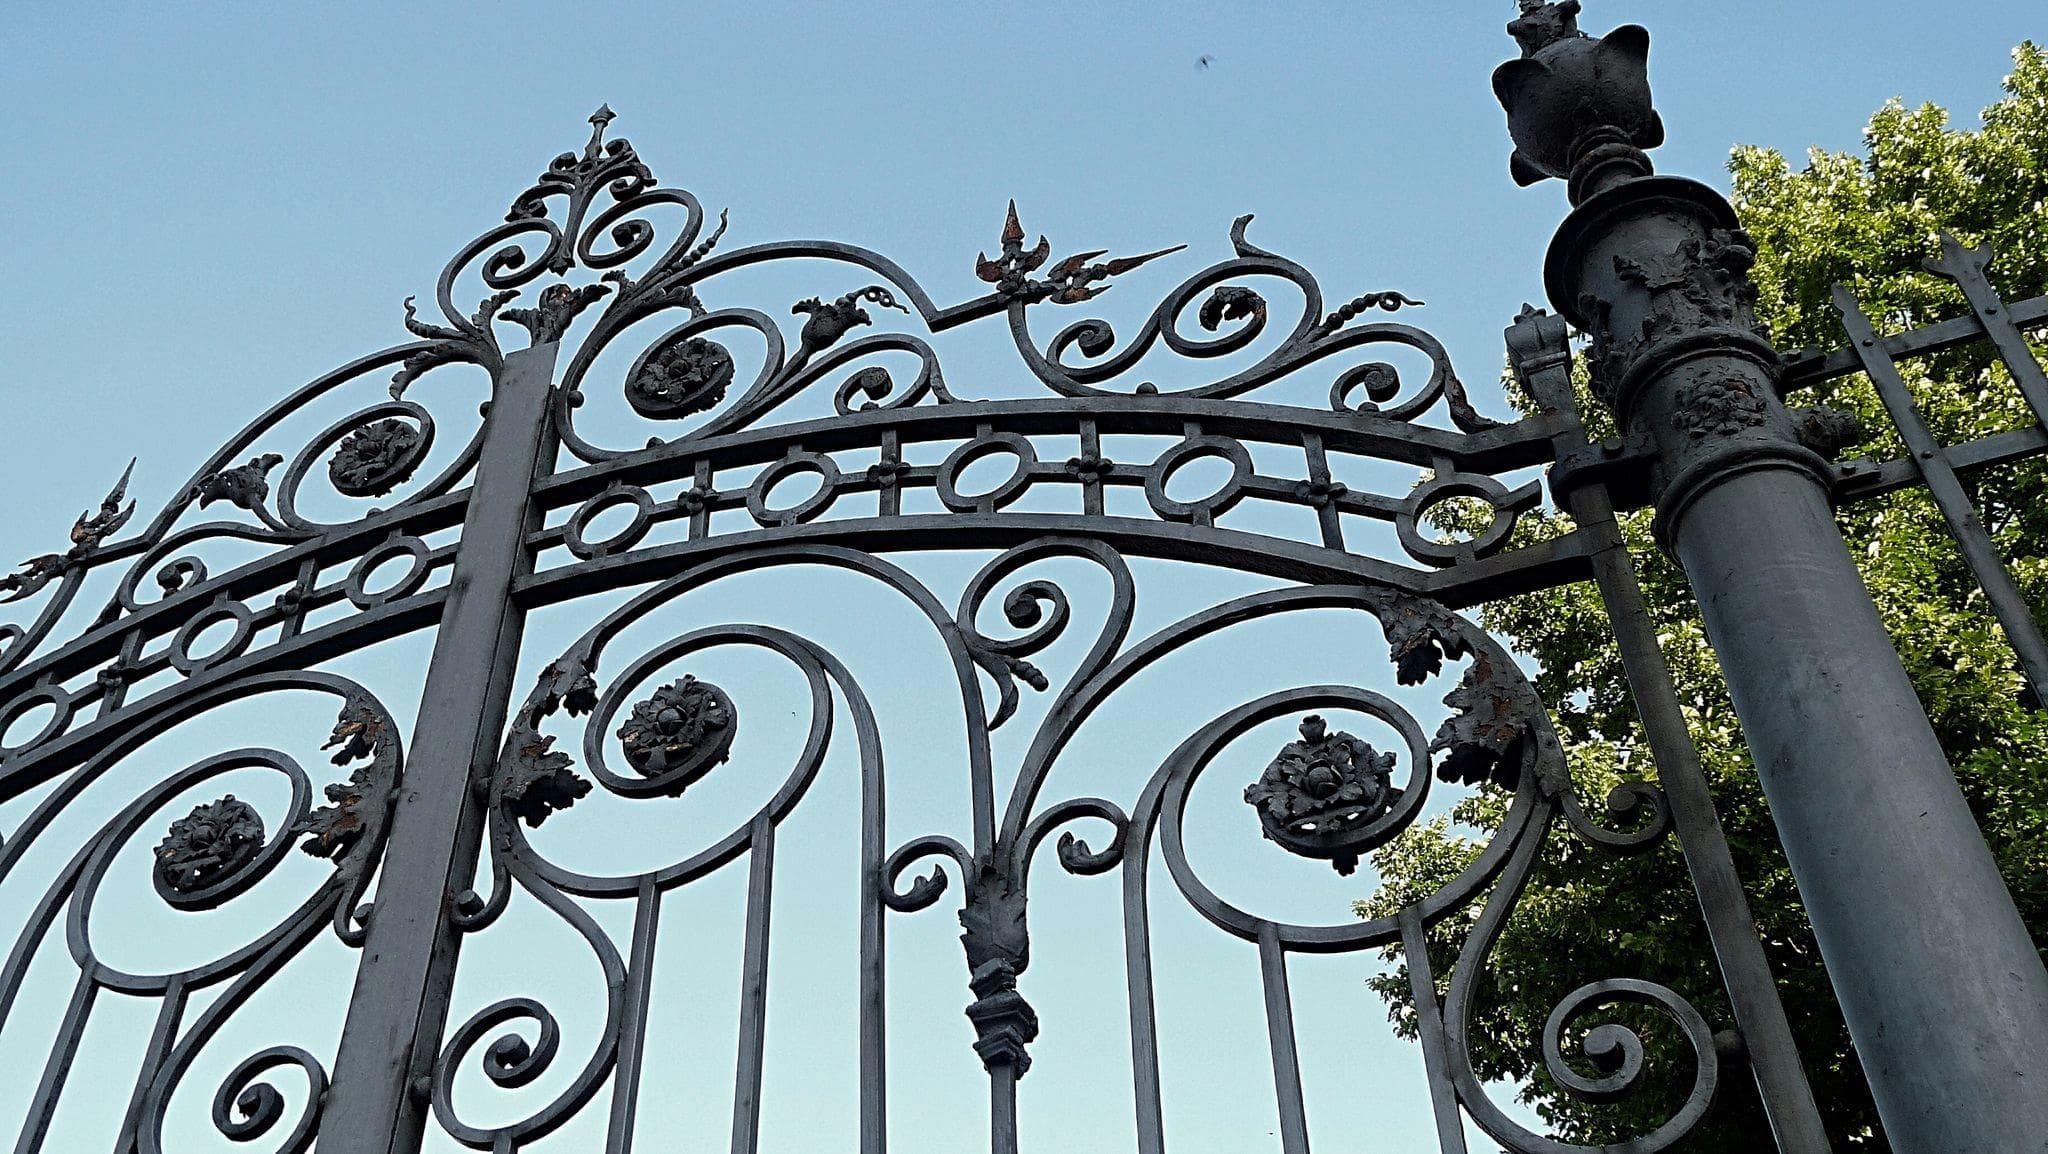 classic ornamental iron gate